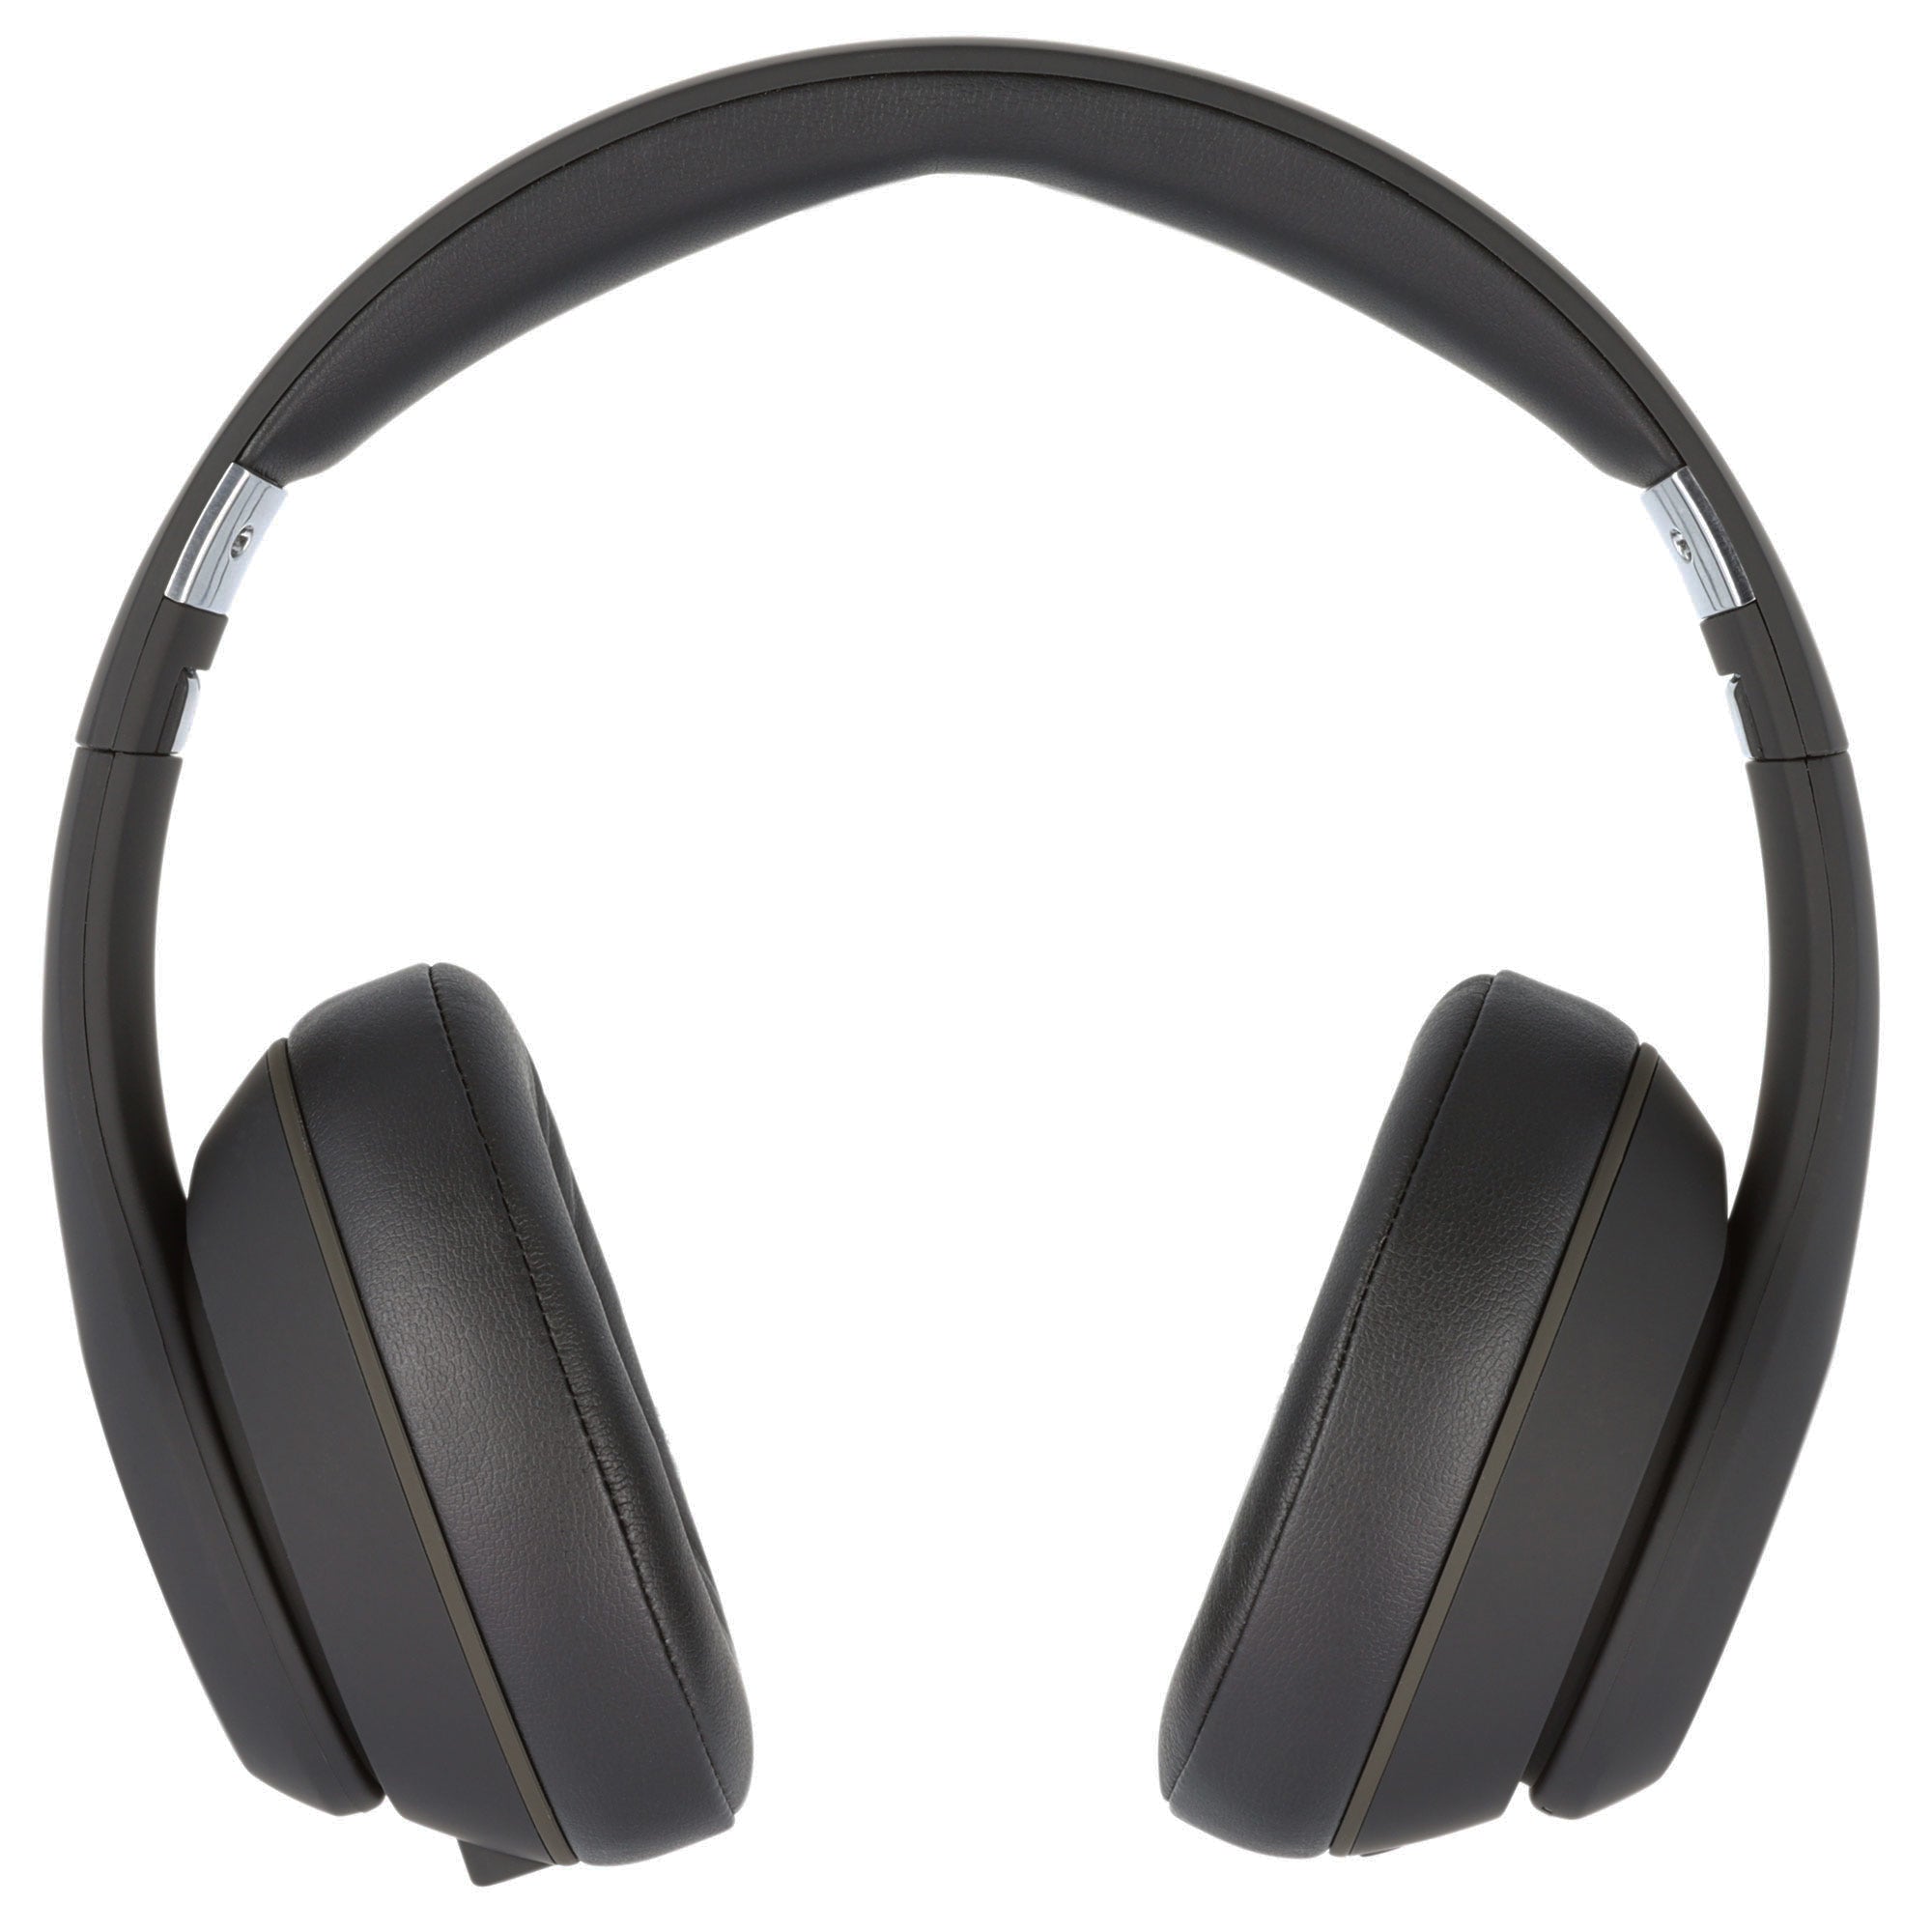 Katana Wireless Headphones